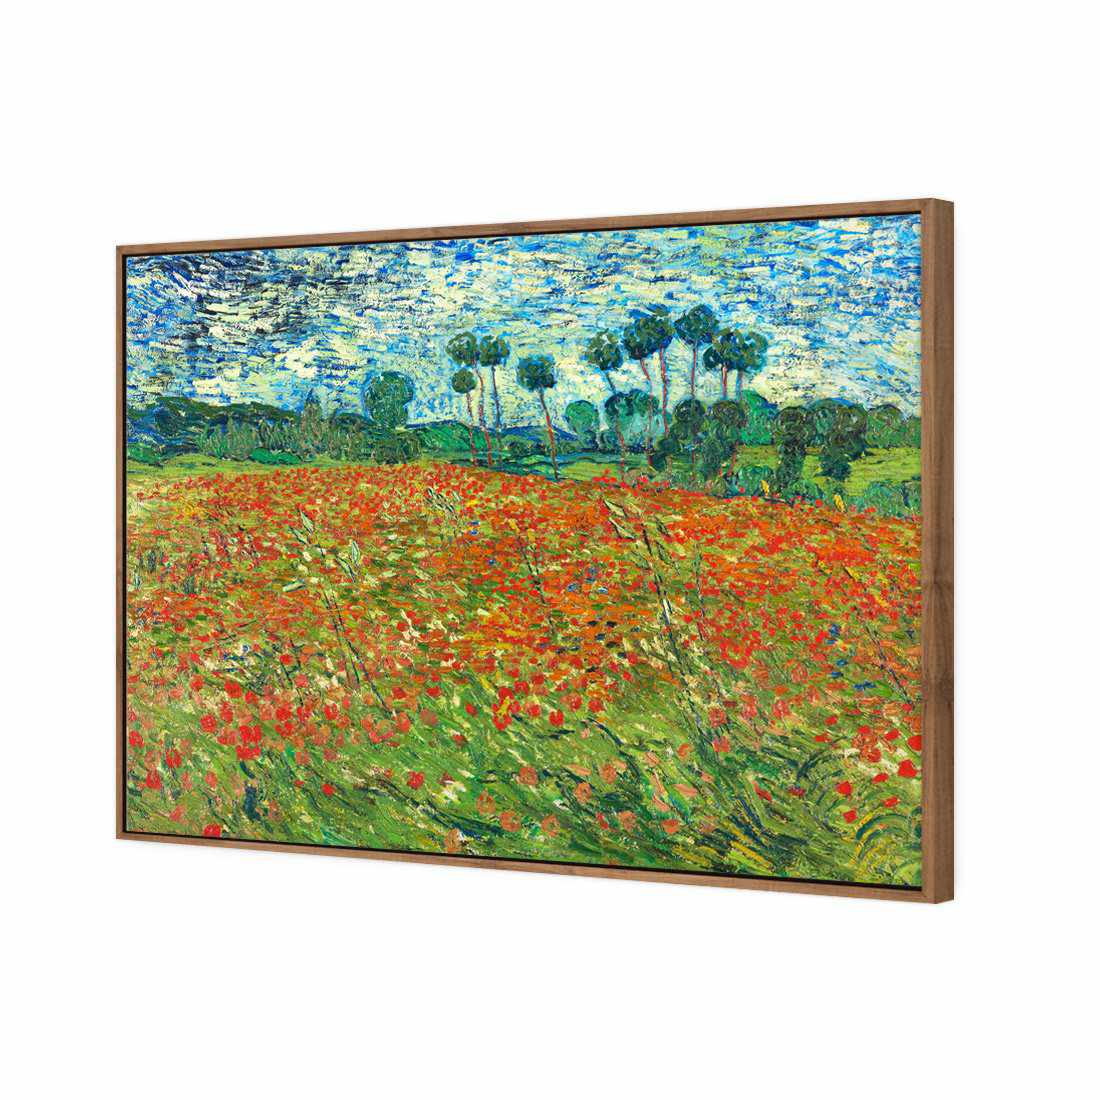 Poppy Field by Van Gogh Canvas Art-Canvas-Wall Art Designs-45x30cm-Canvas - Natural Frame-Wall Art Designs